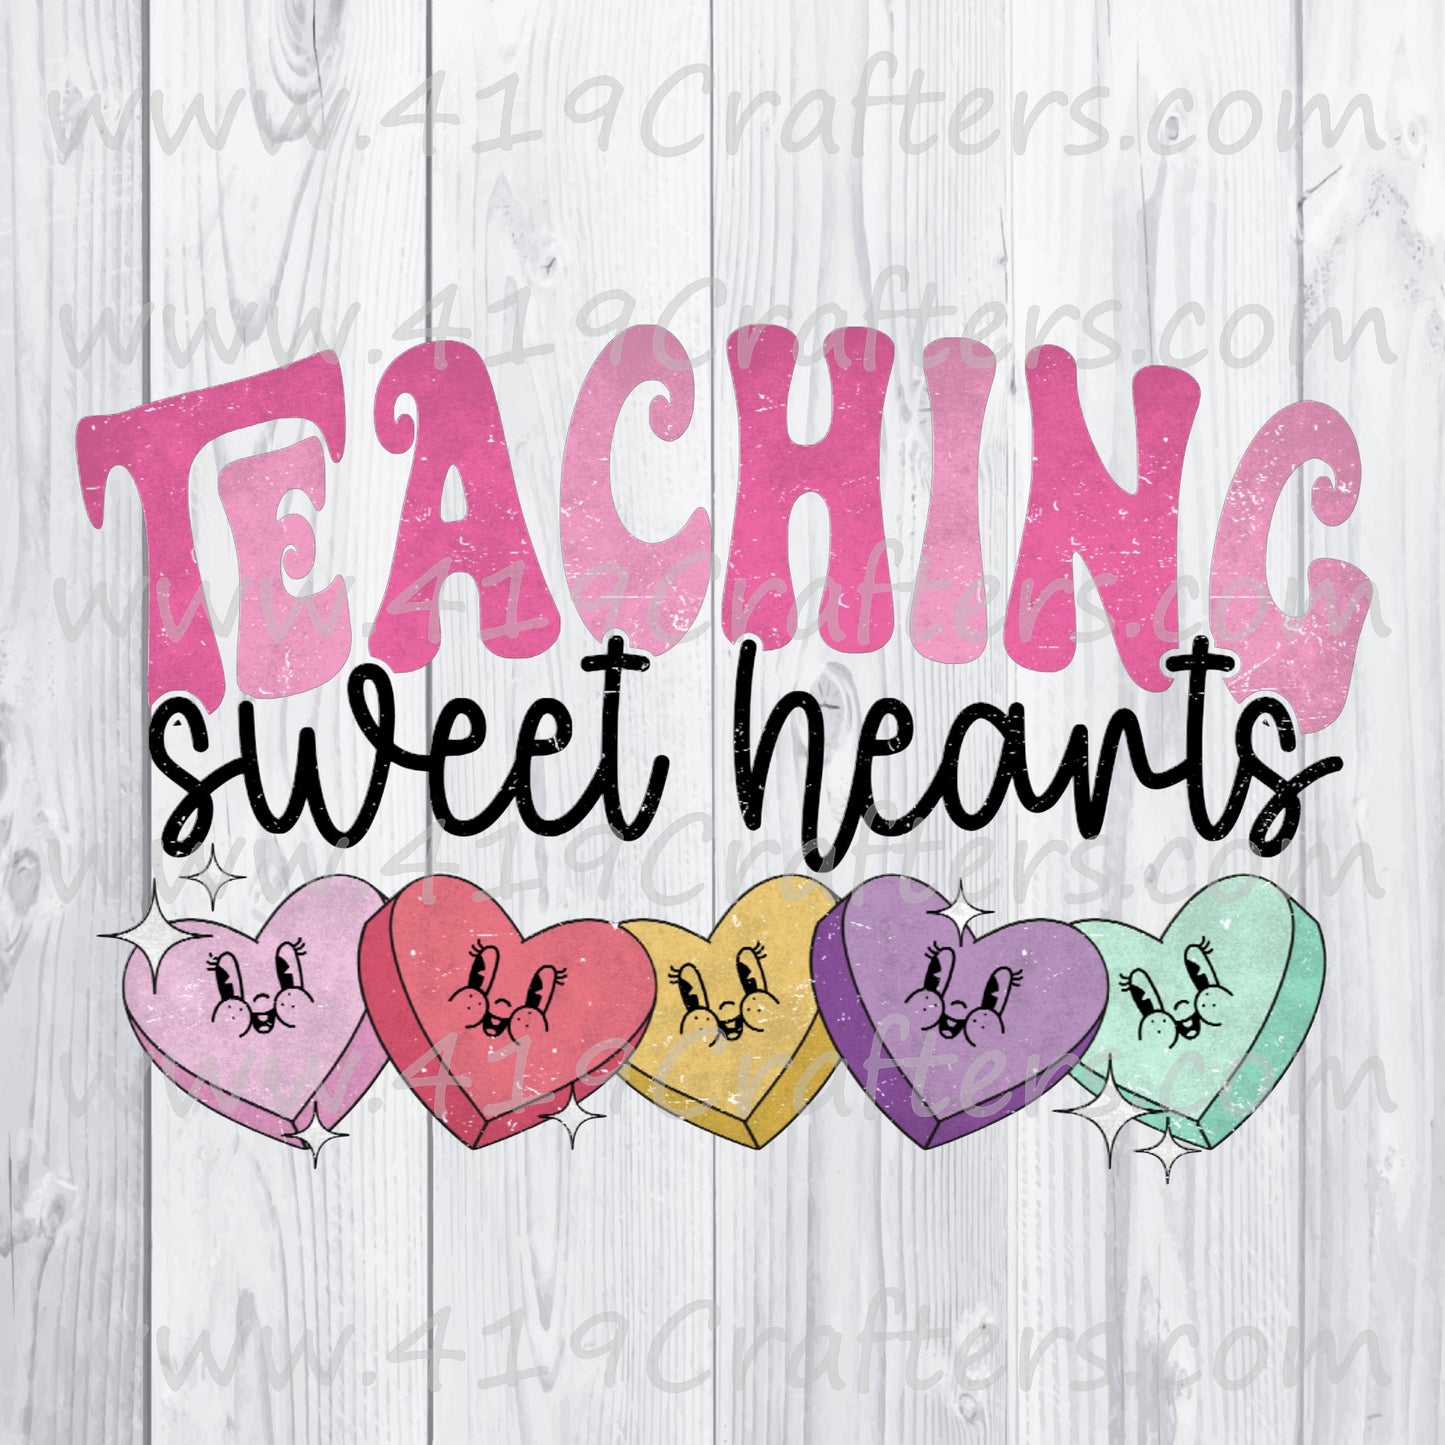 TEACHING SWEETHEARTS